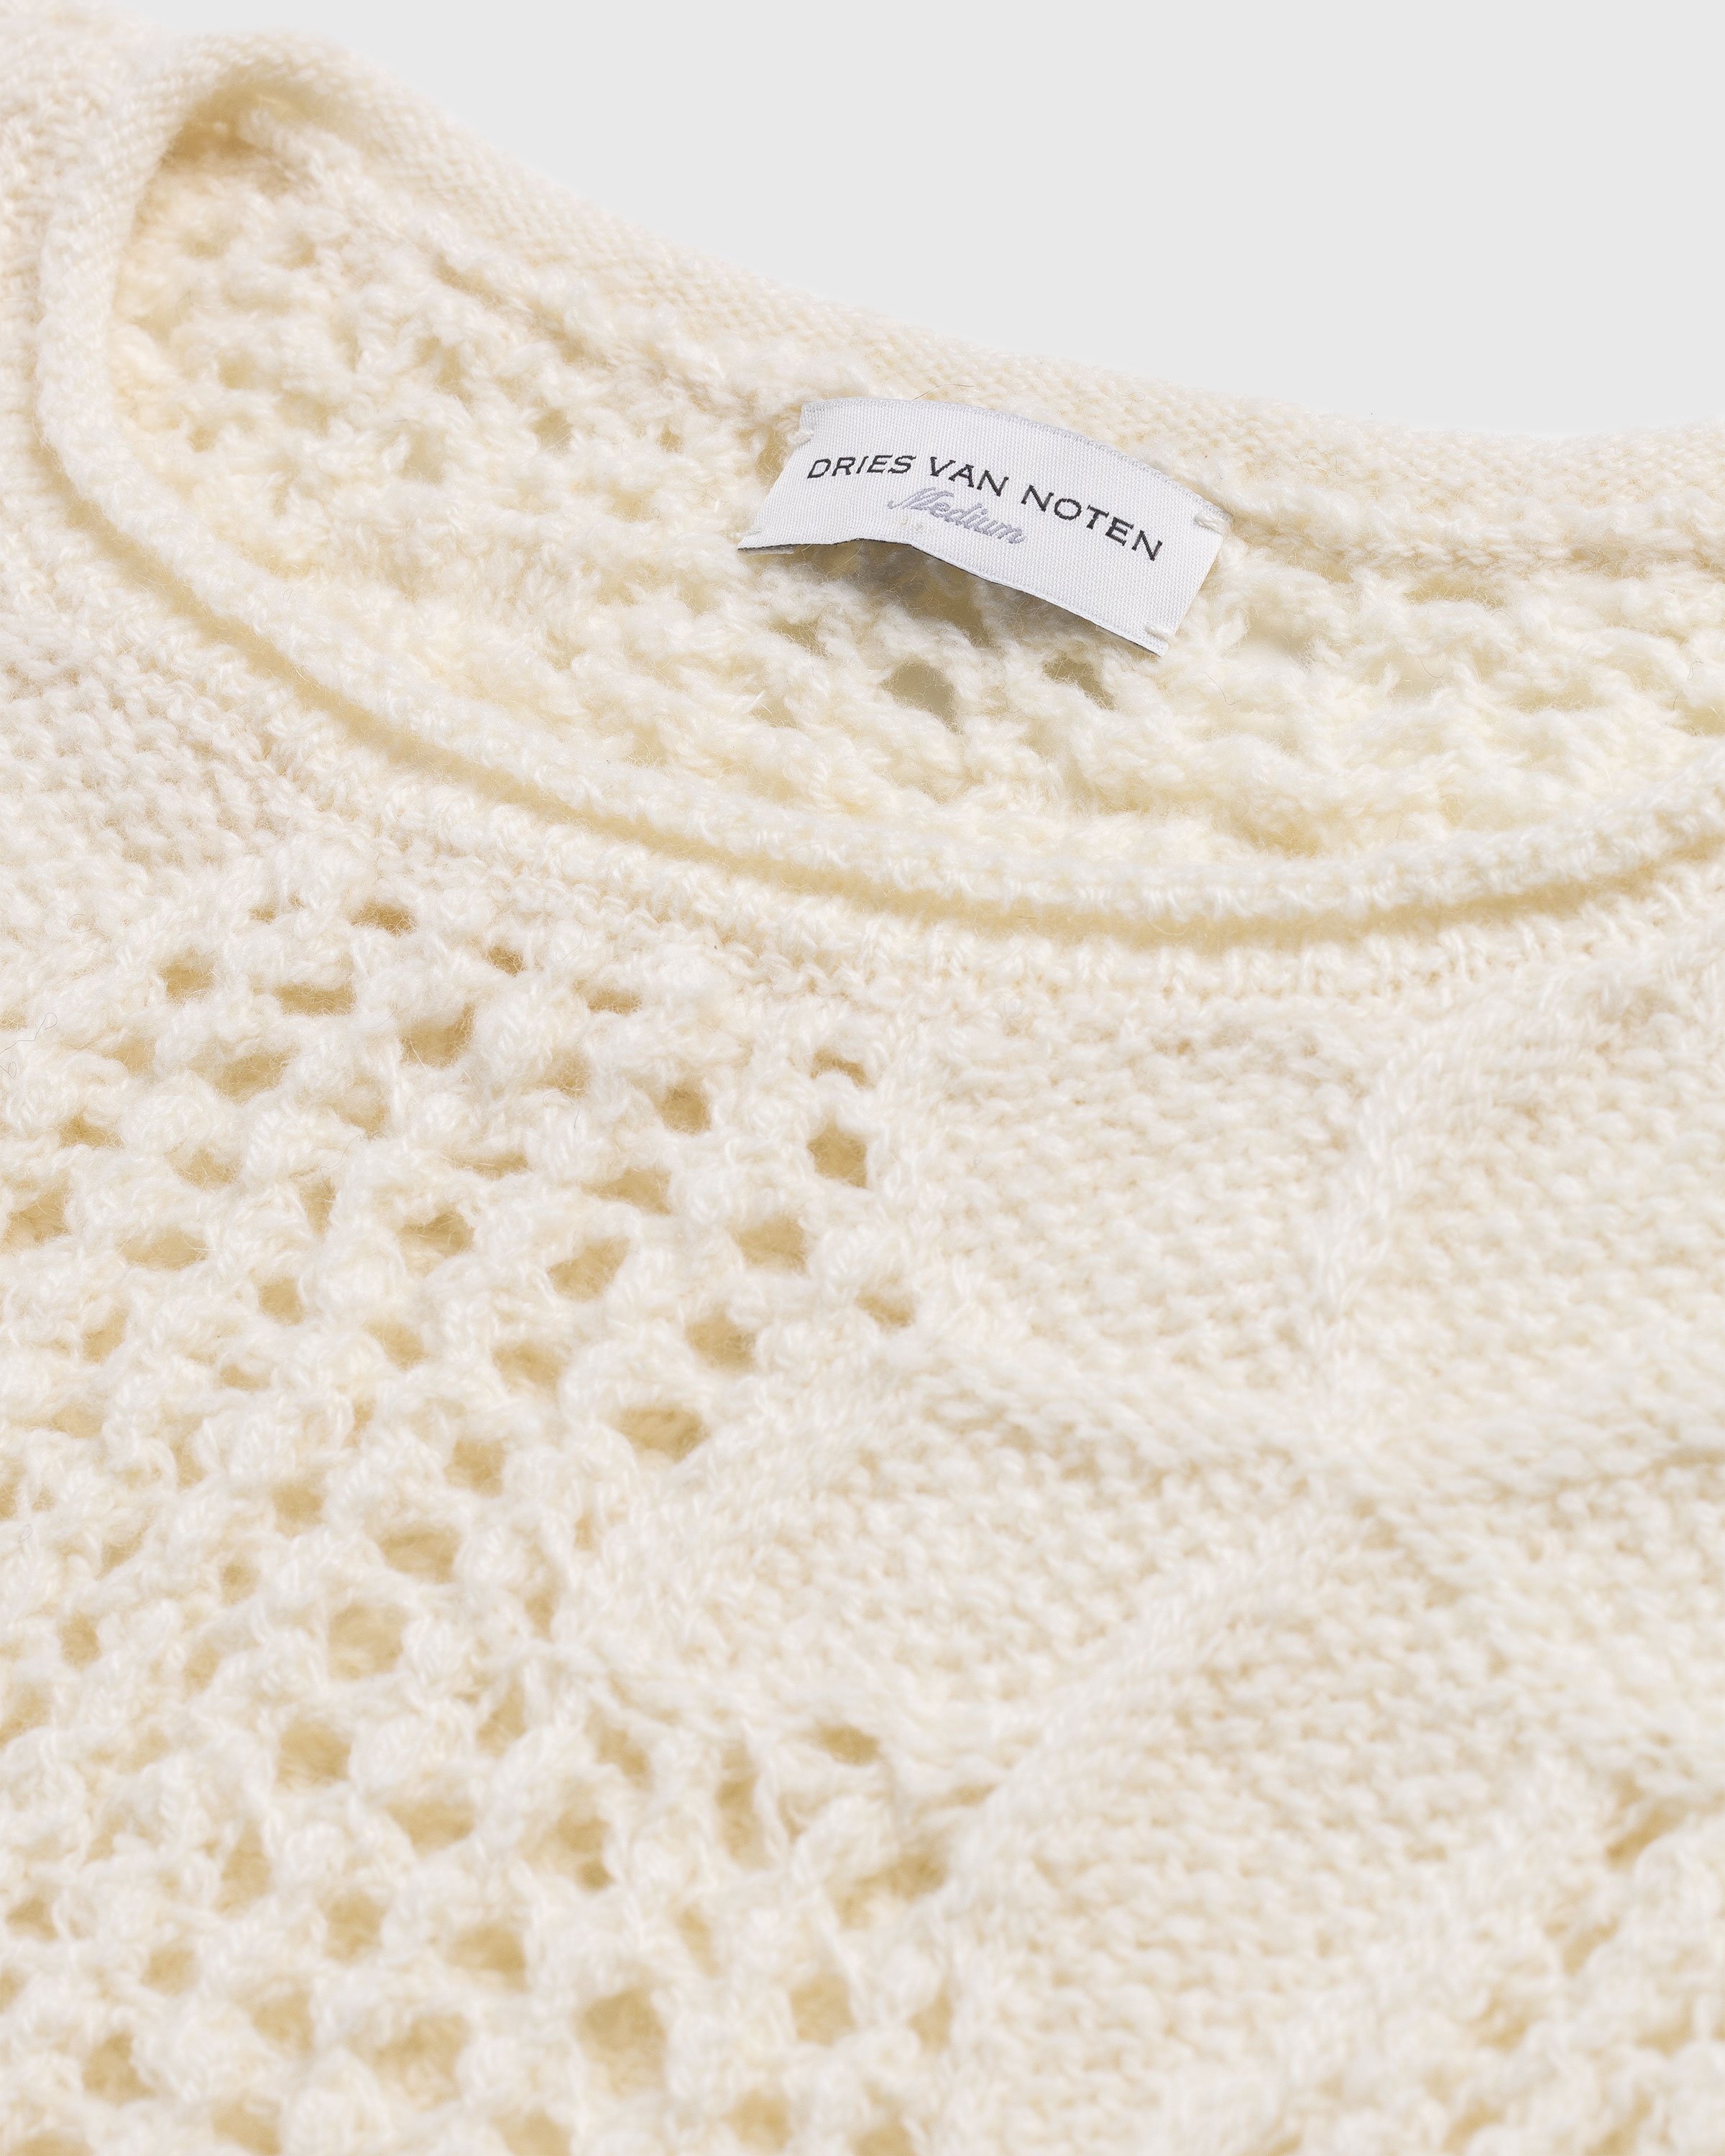 Dries van Noten - Meddo Knit Sweater Vest Ecru - Clothing - White - Image 5